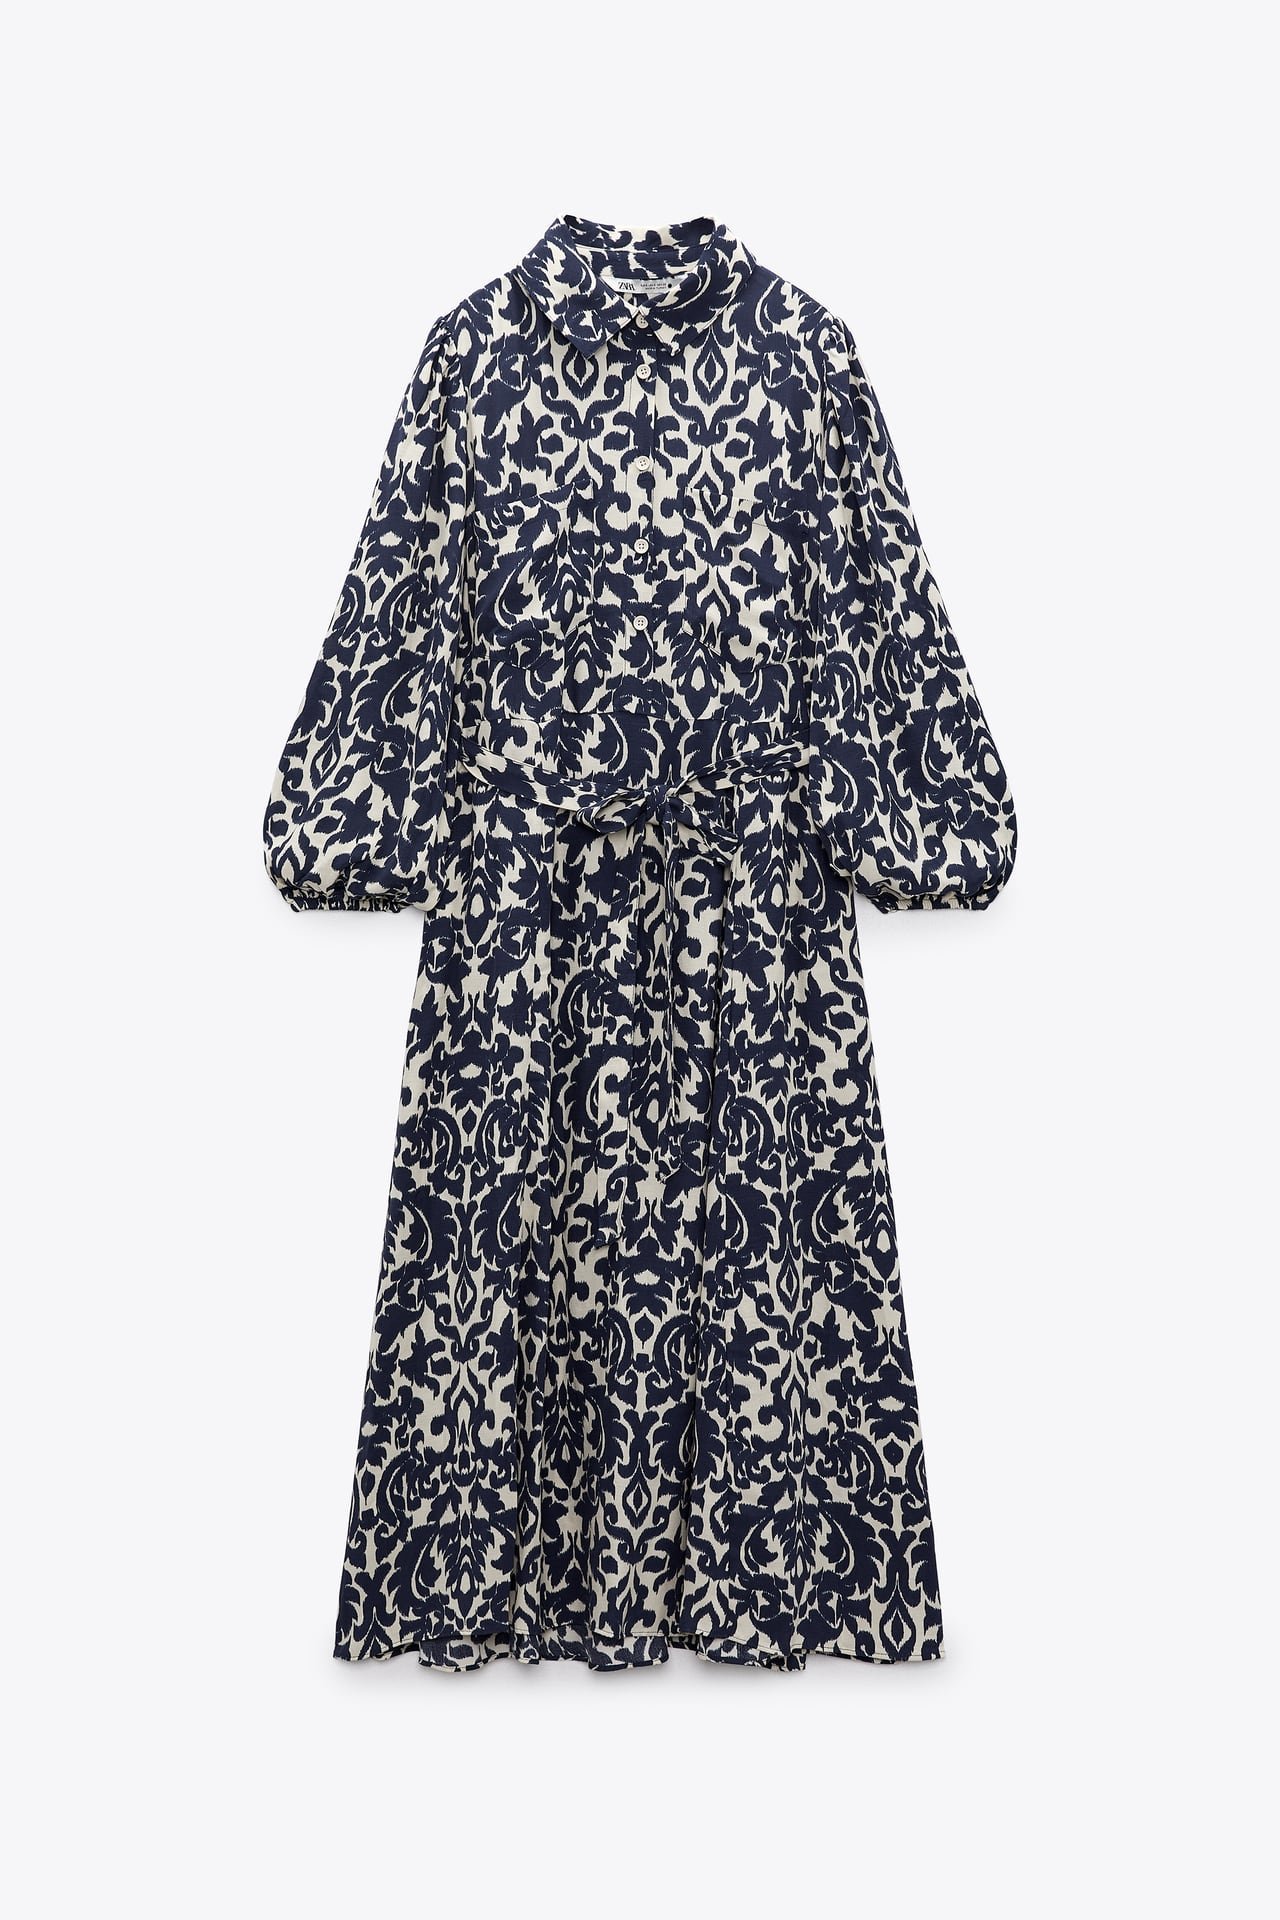 Zara Printed Midi Dress.jpeg